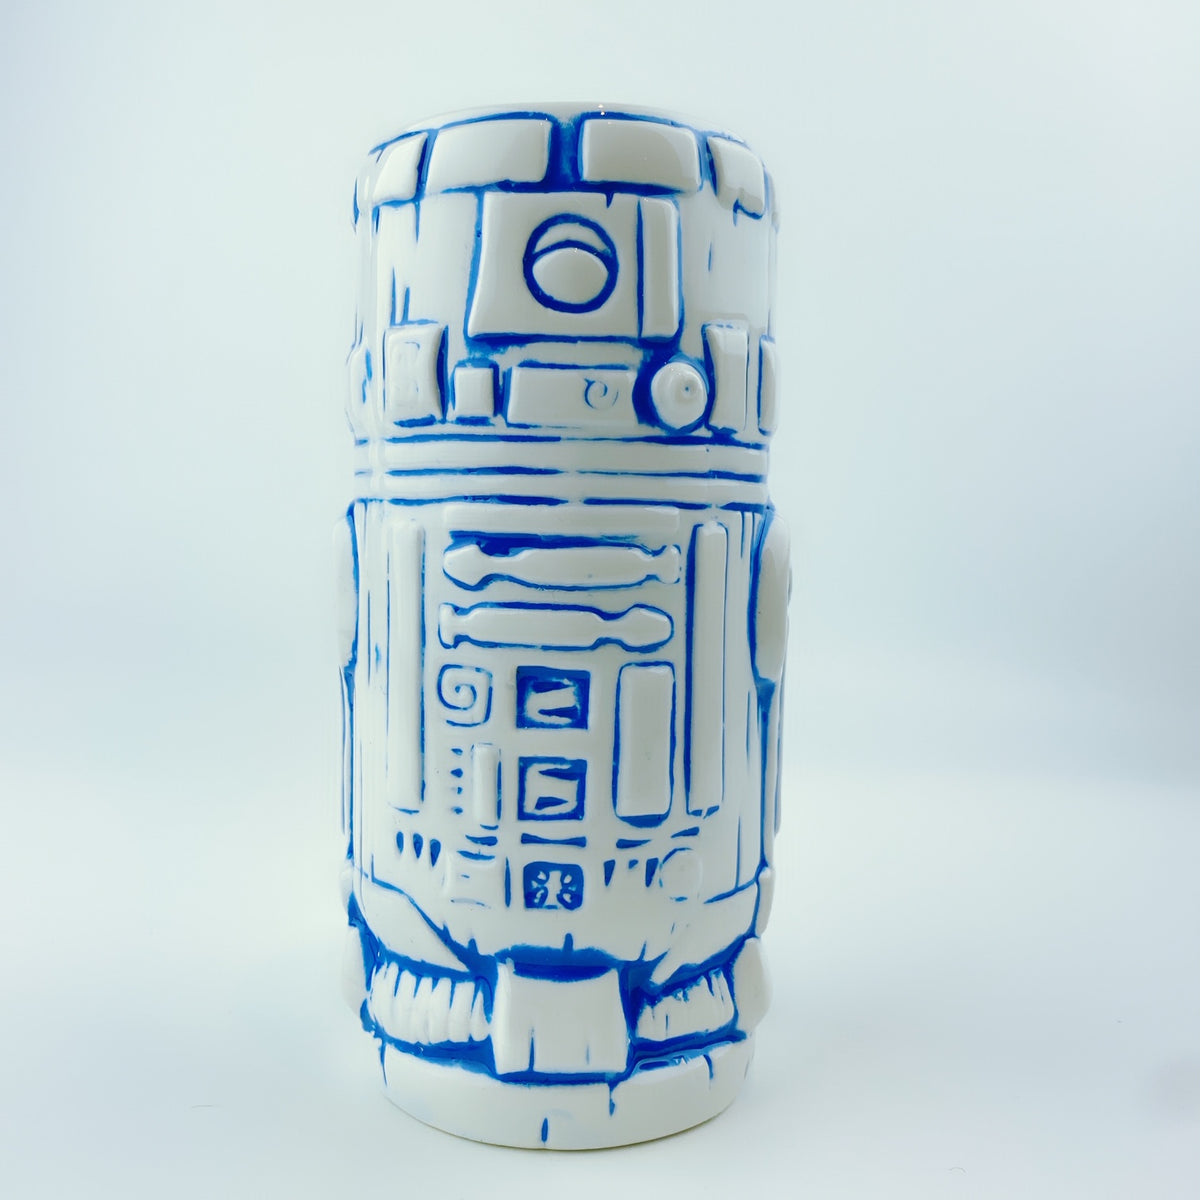 Star Wars Parodic Mug with Blue handle and Blue interior - R2-D2 (Funny  Star Wars Parody - High Quality Mug - Ref : 382)